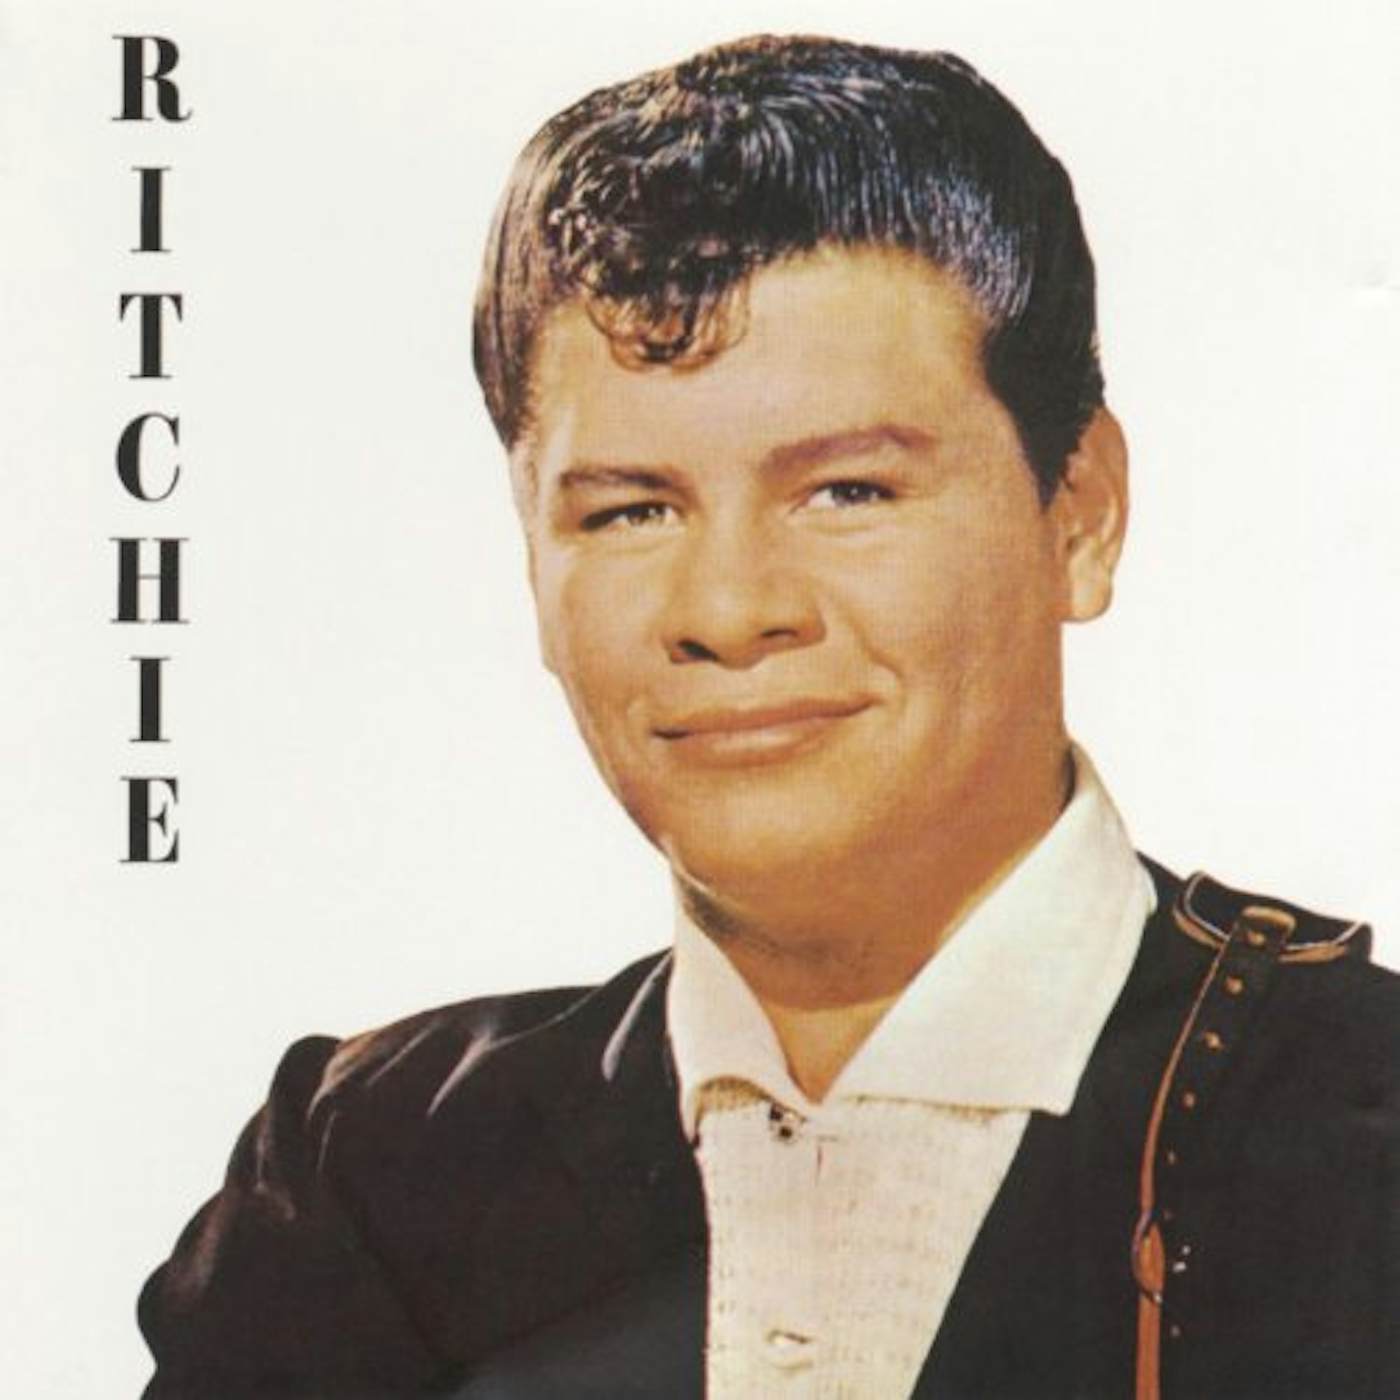 Ritchie Valens Vinyl Record